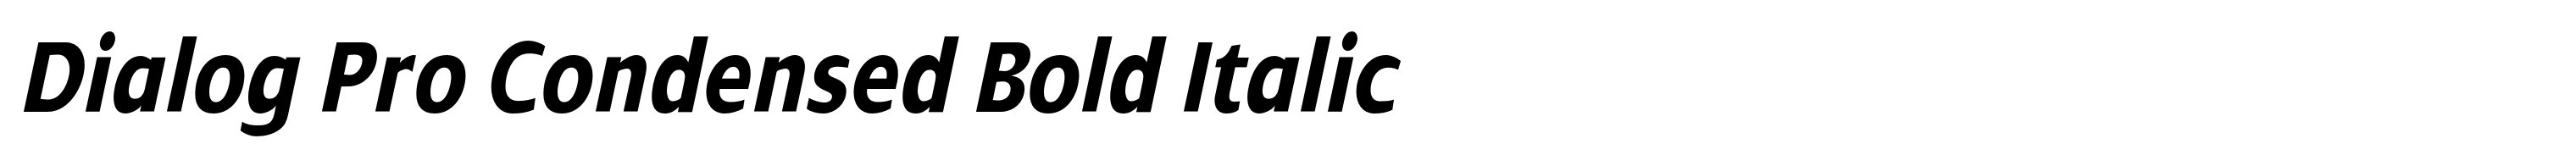 Dialog Pro Condensed Bold Italic